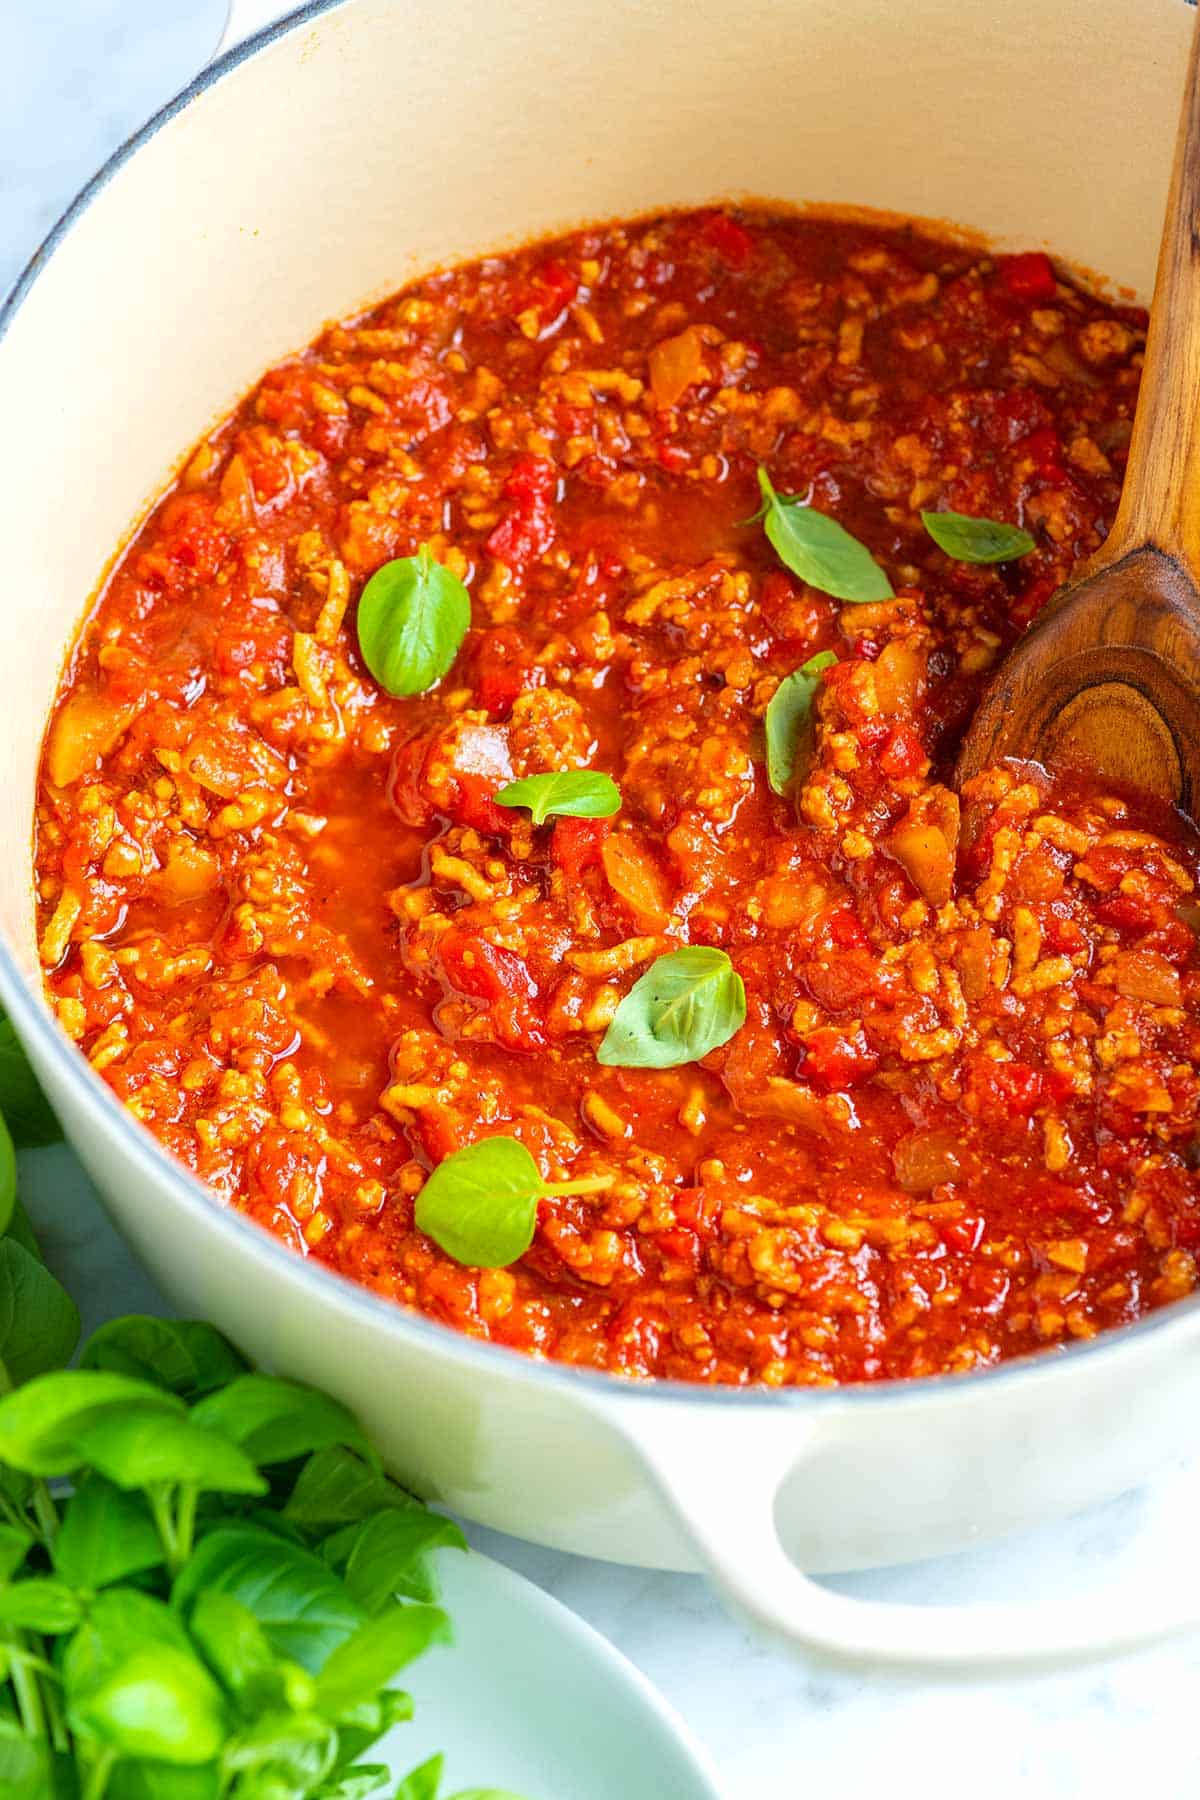 Pot of Homemade Spaghetti Sauce